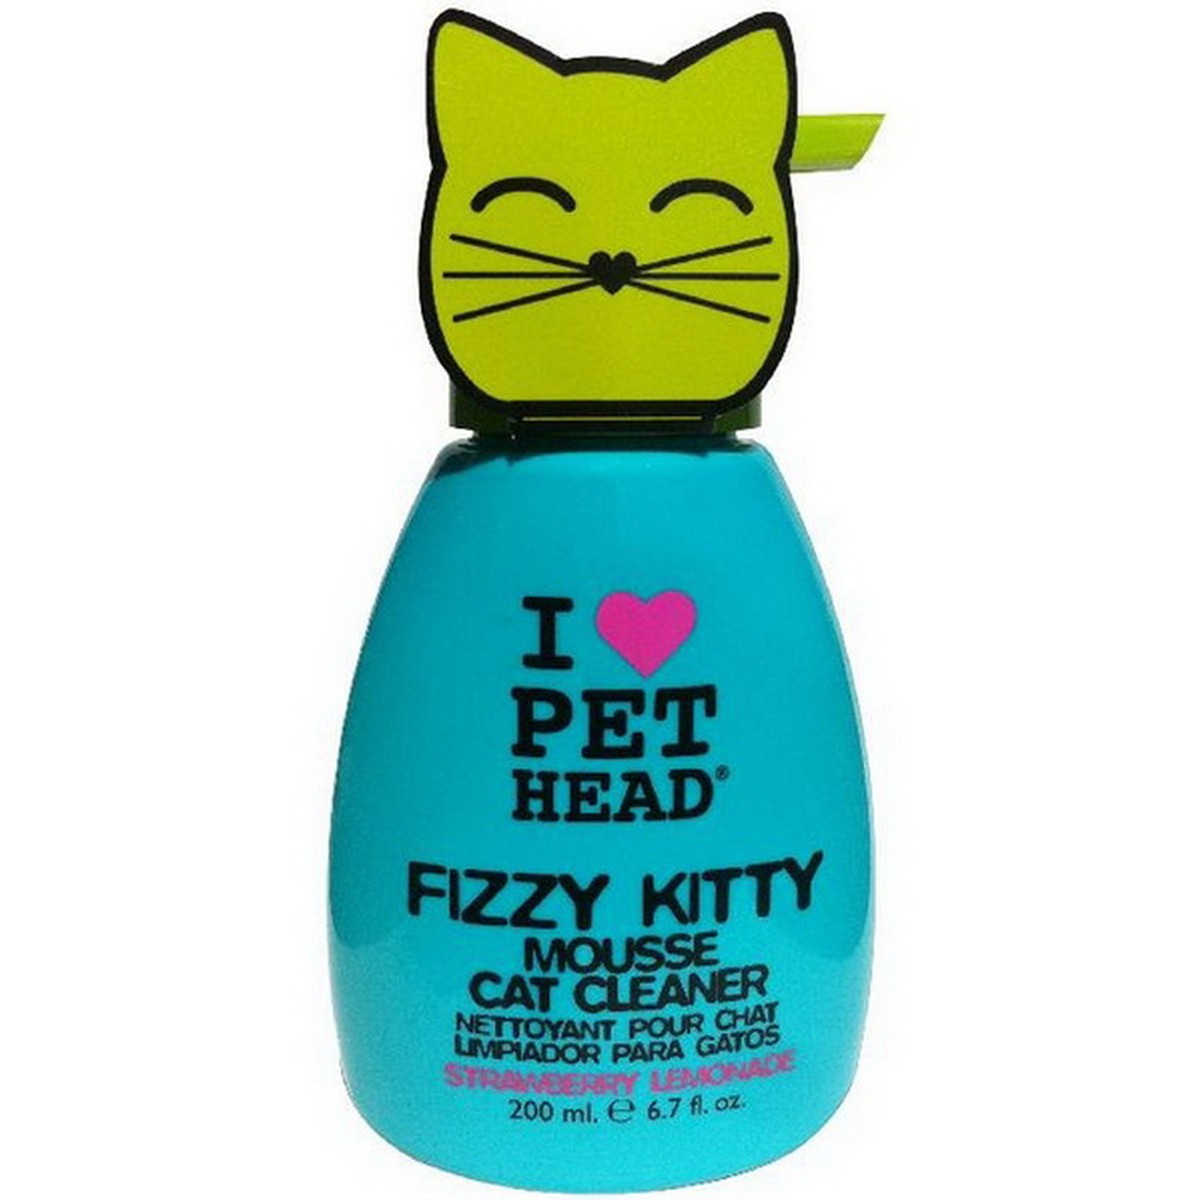   Pet head fizzy kitty mousse sans rinçage  